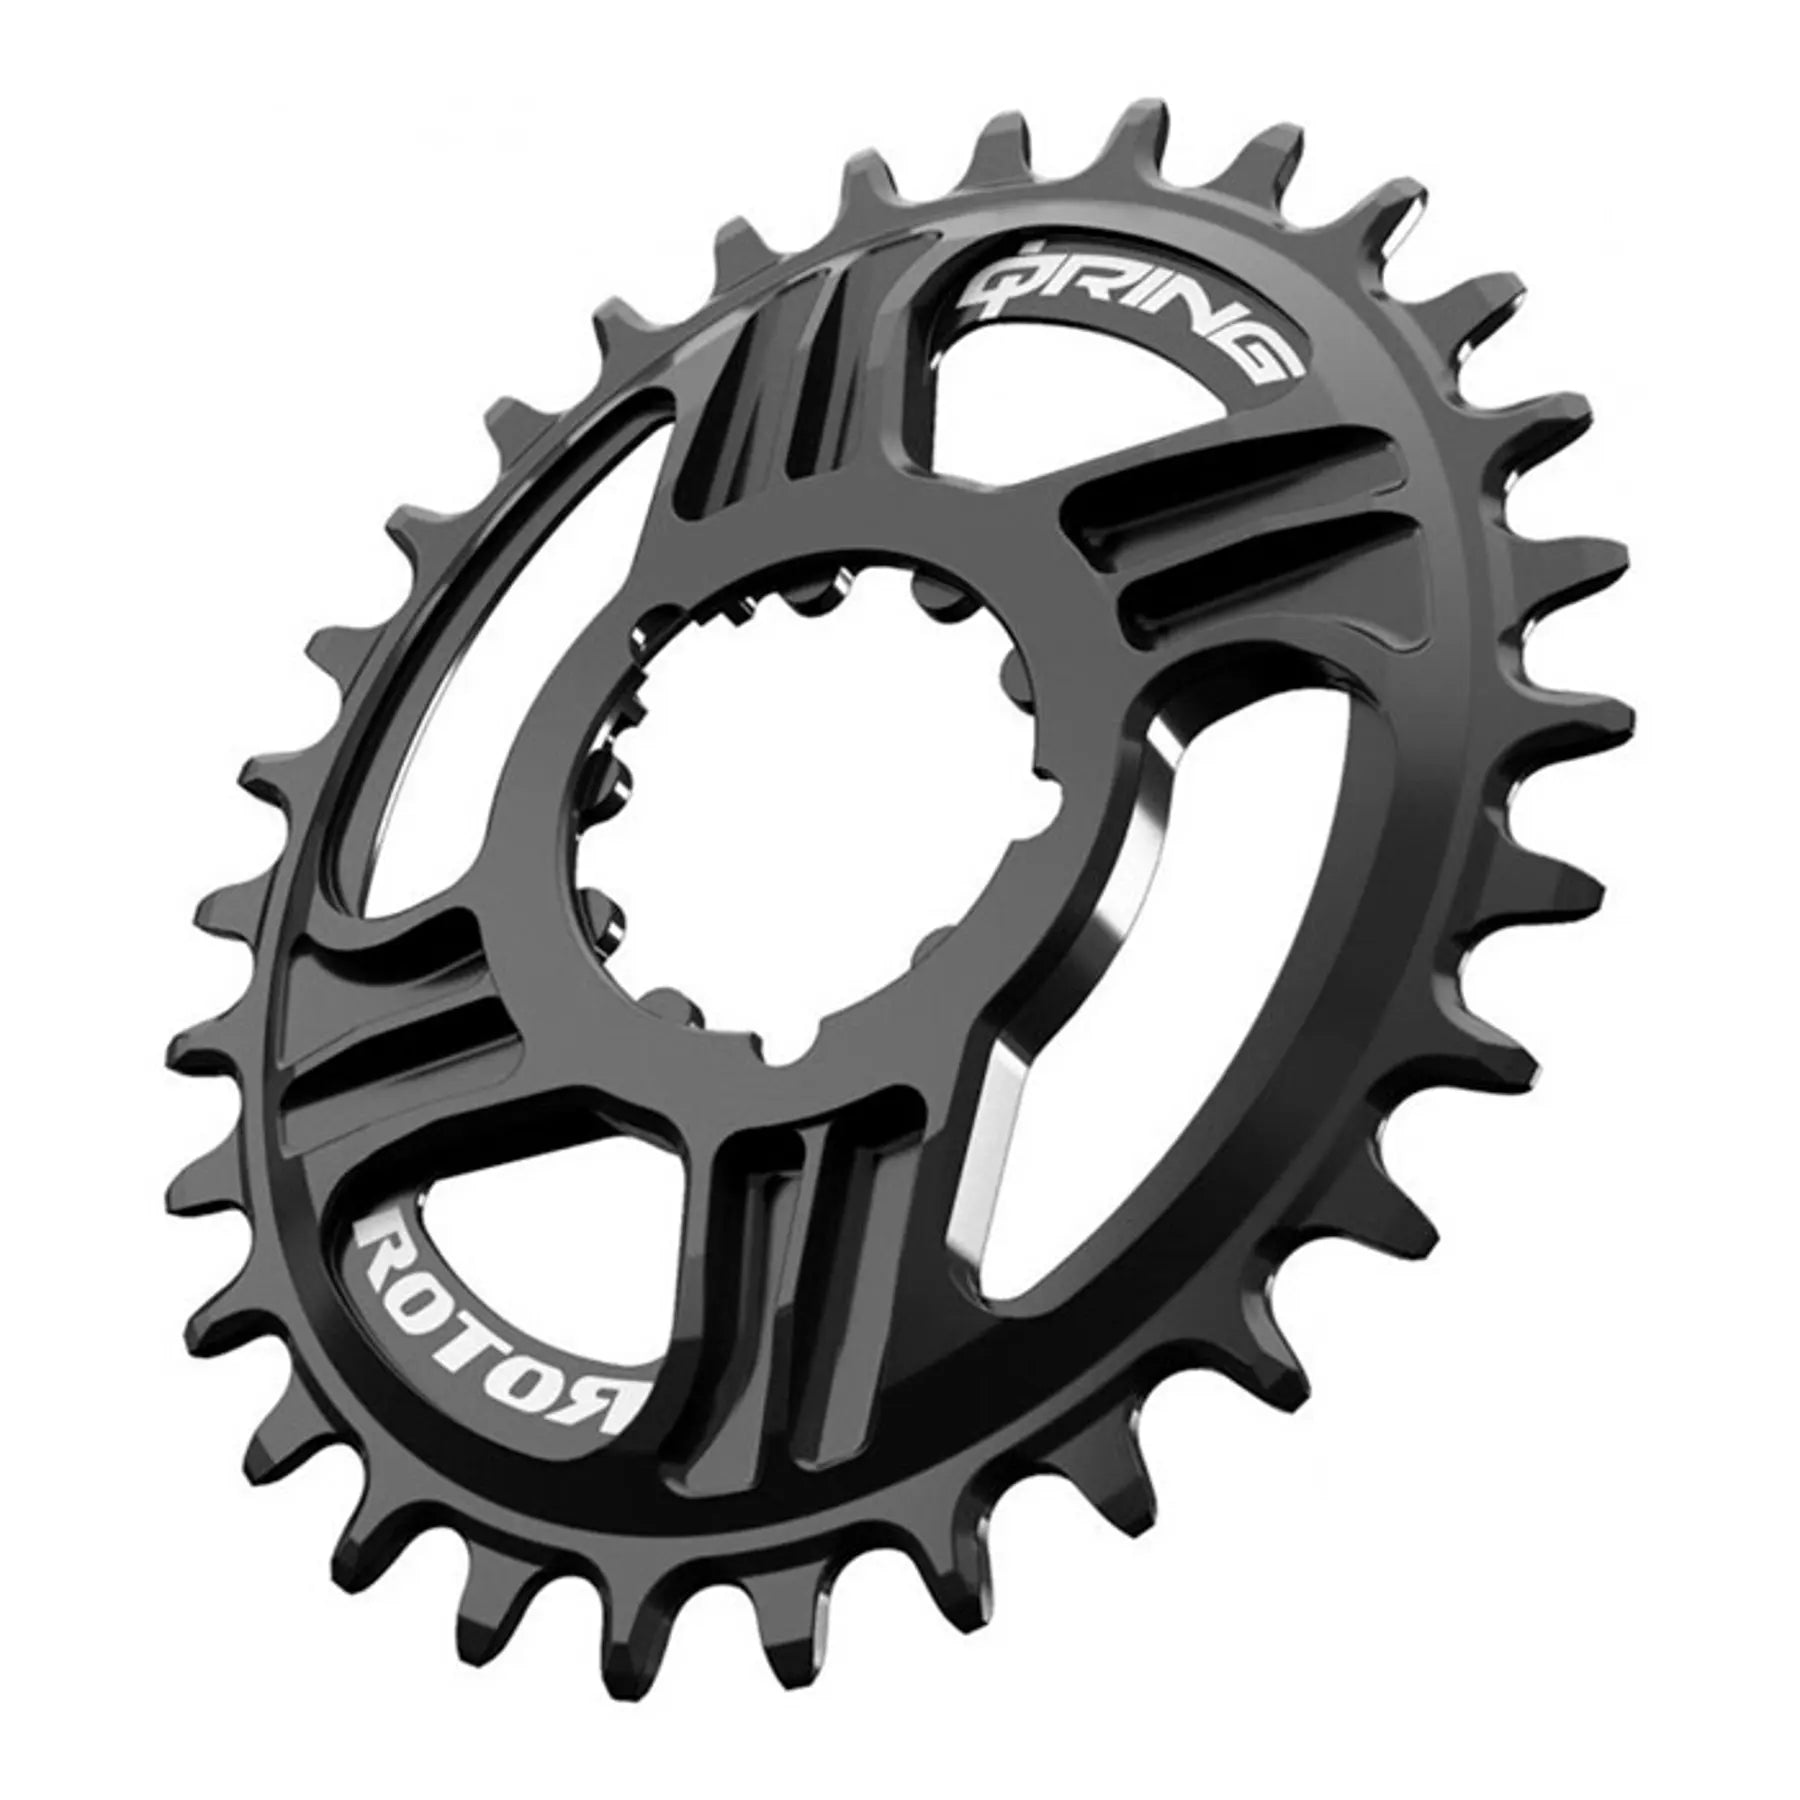 Plato Rotor Q Rings Sram 3mm Boost | VAS Cycling Boutique